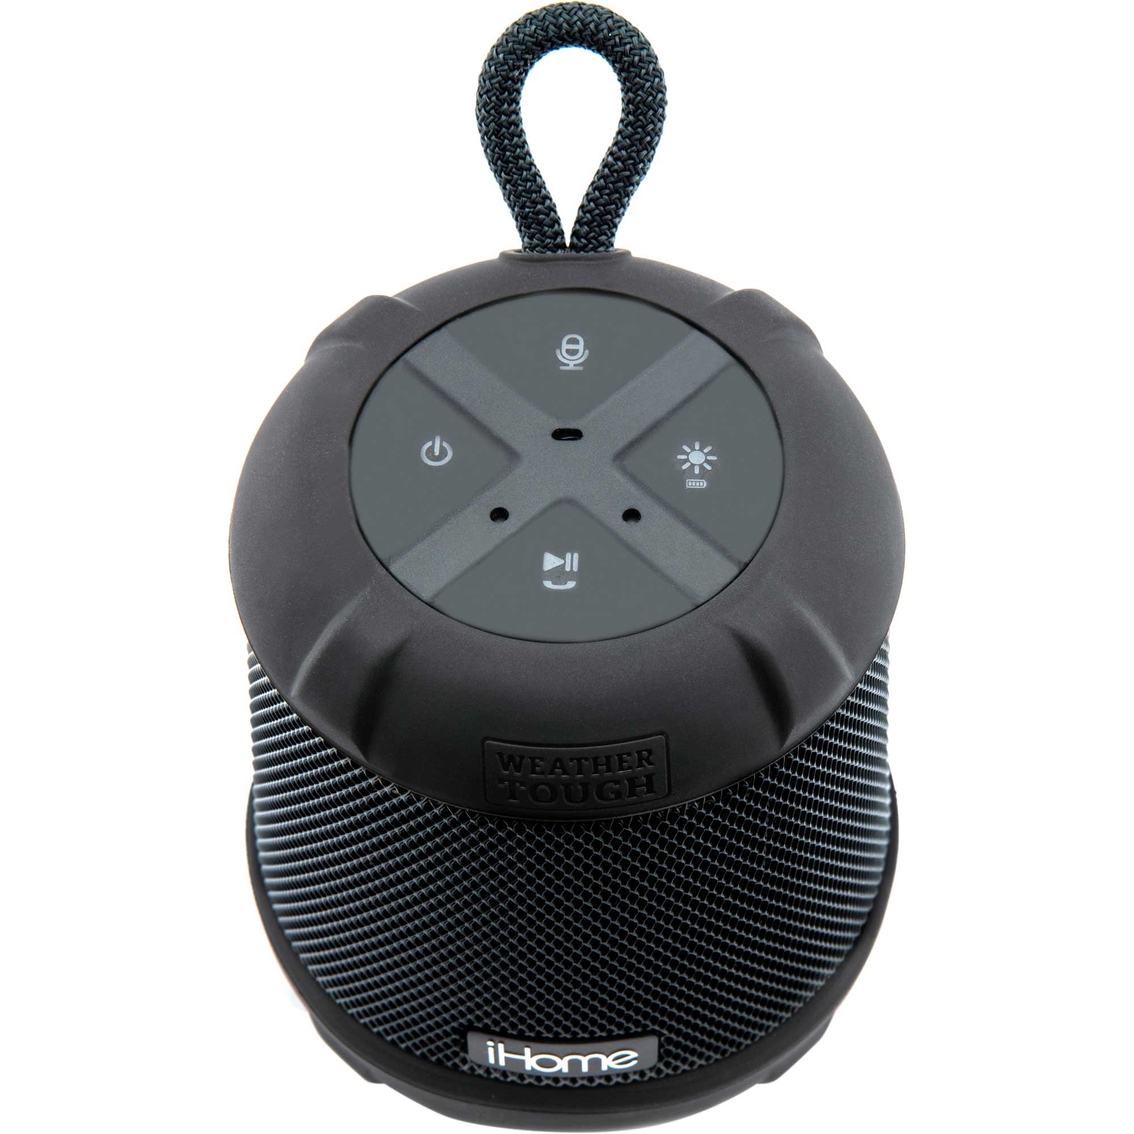 iHome PlayTough Waterproof, Shockproof Bluetooth Speaker with Accent Lighting - Image 7 of 10